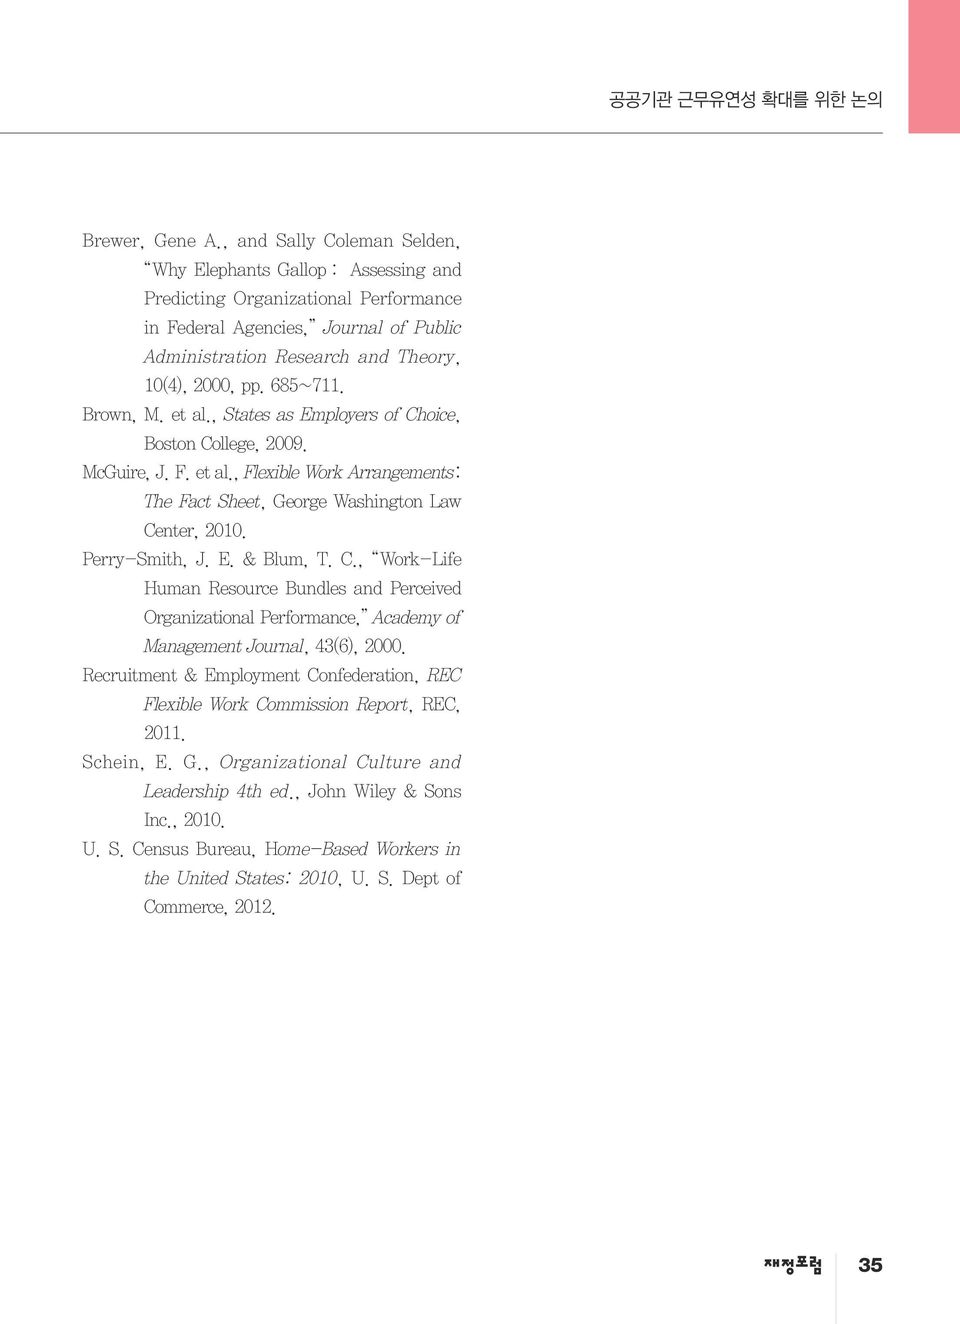 685~711. Brown, M. et al., States as Employers of Choice, Boston College, 2009. McGuire, J. F. et al., Flexible Work Arrangements: The Fact Sheet, George Washington Law Center, 2010. Perry-Smith, J.